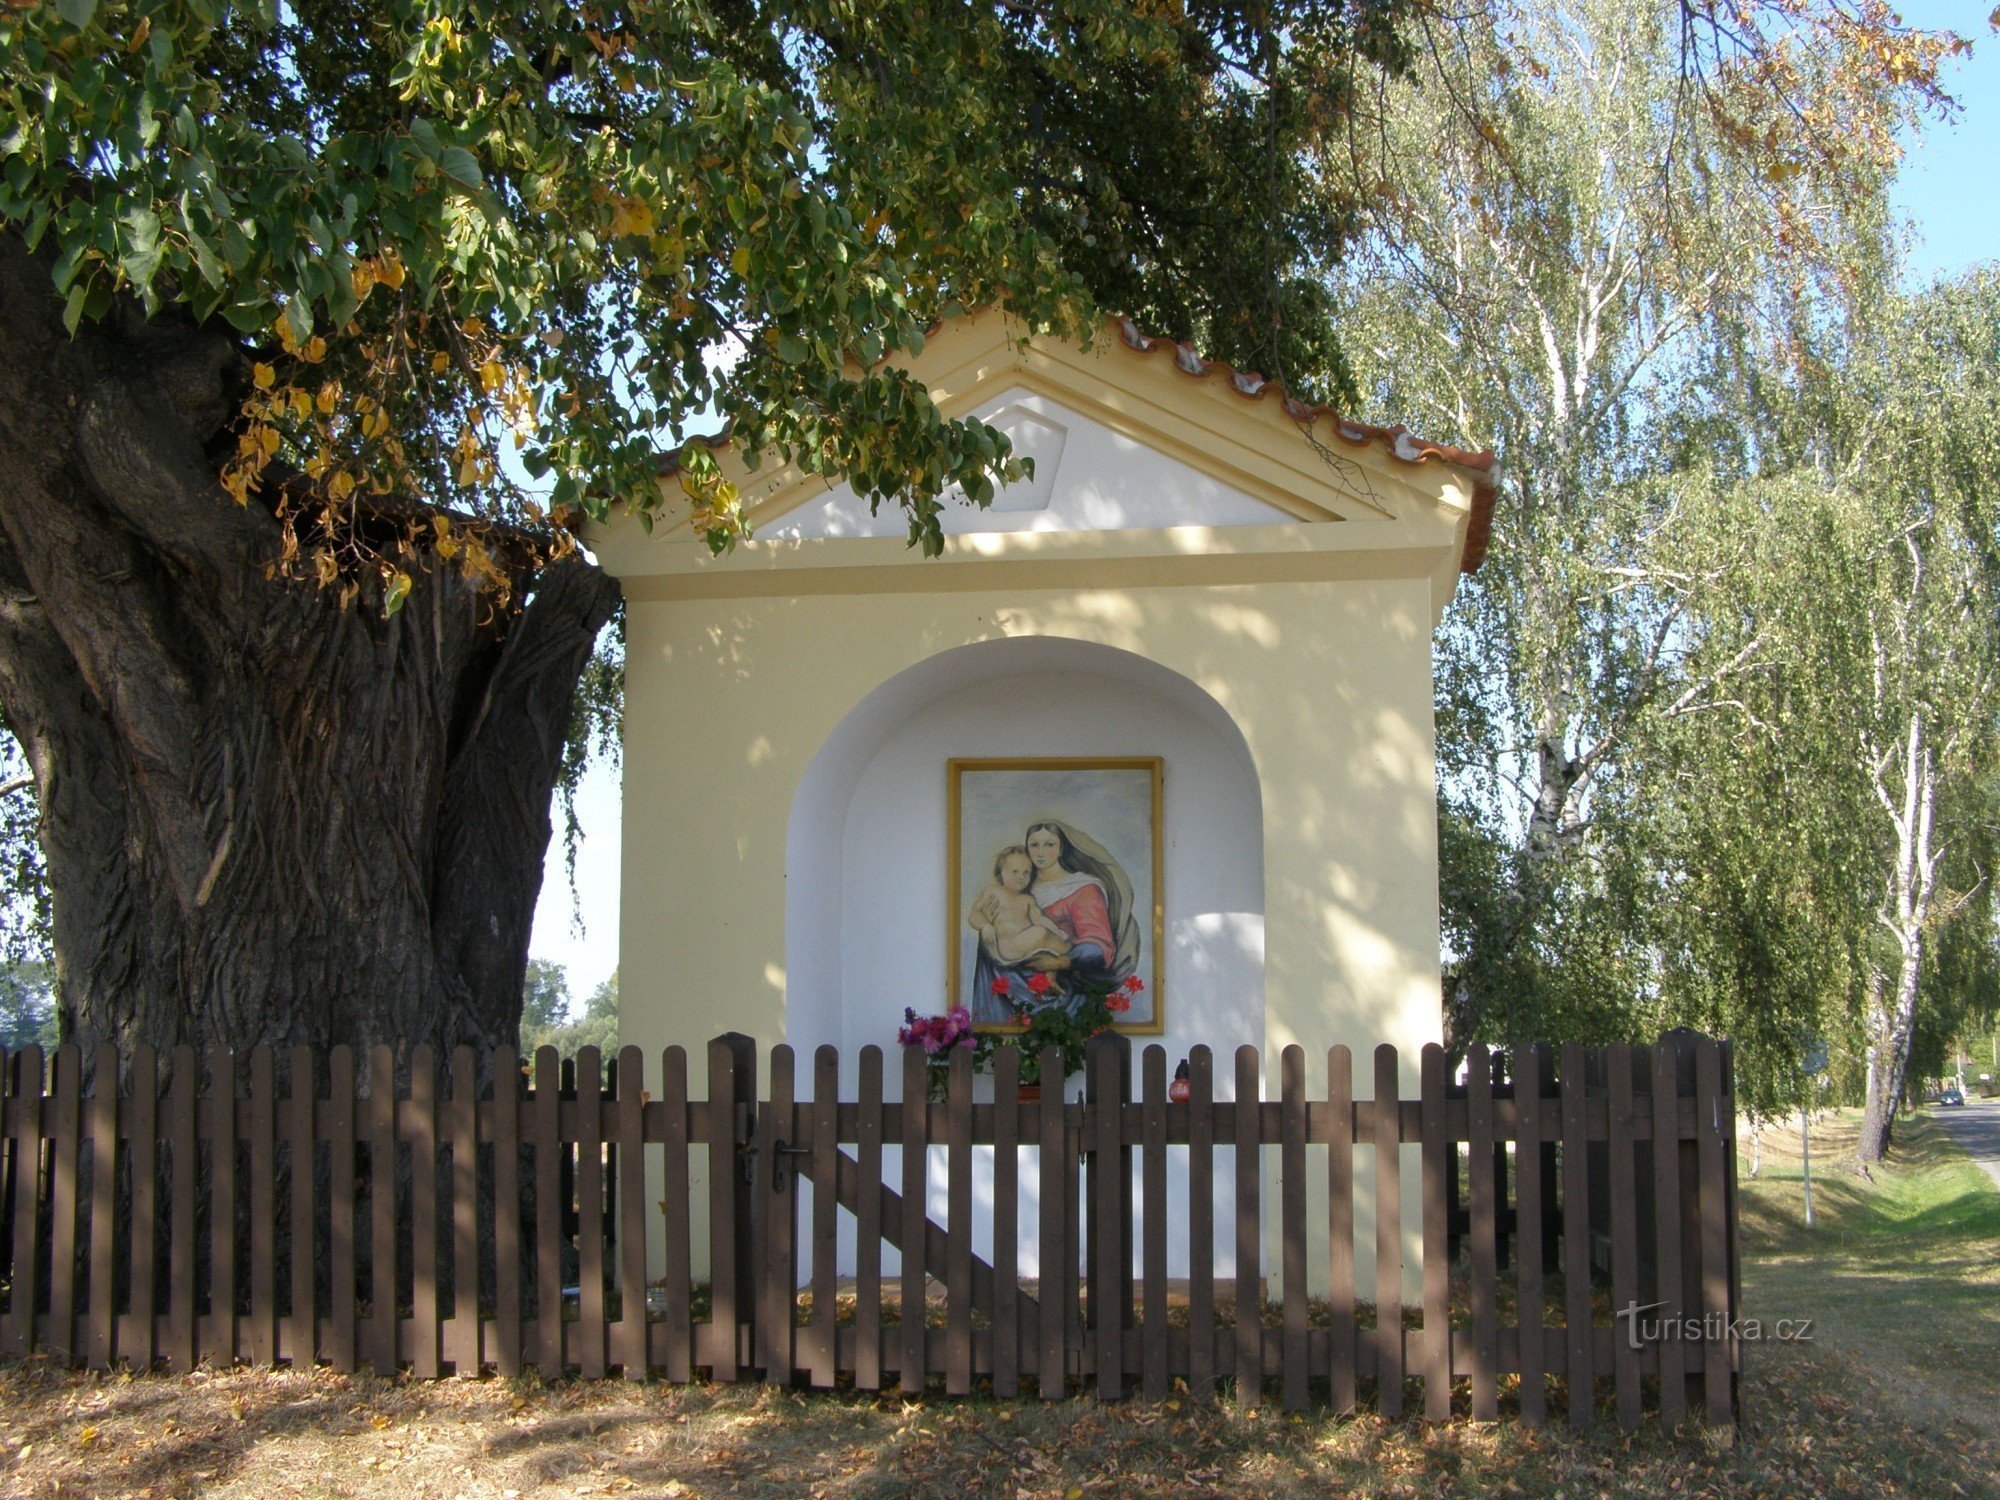 Kratonohos - chapel